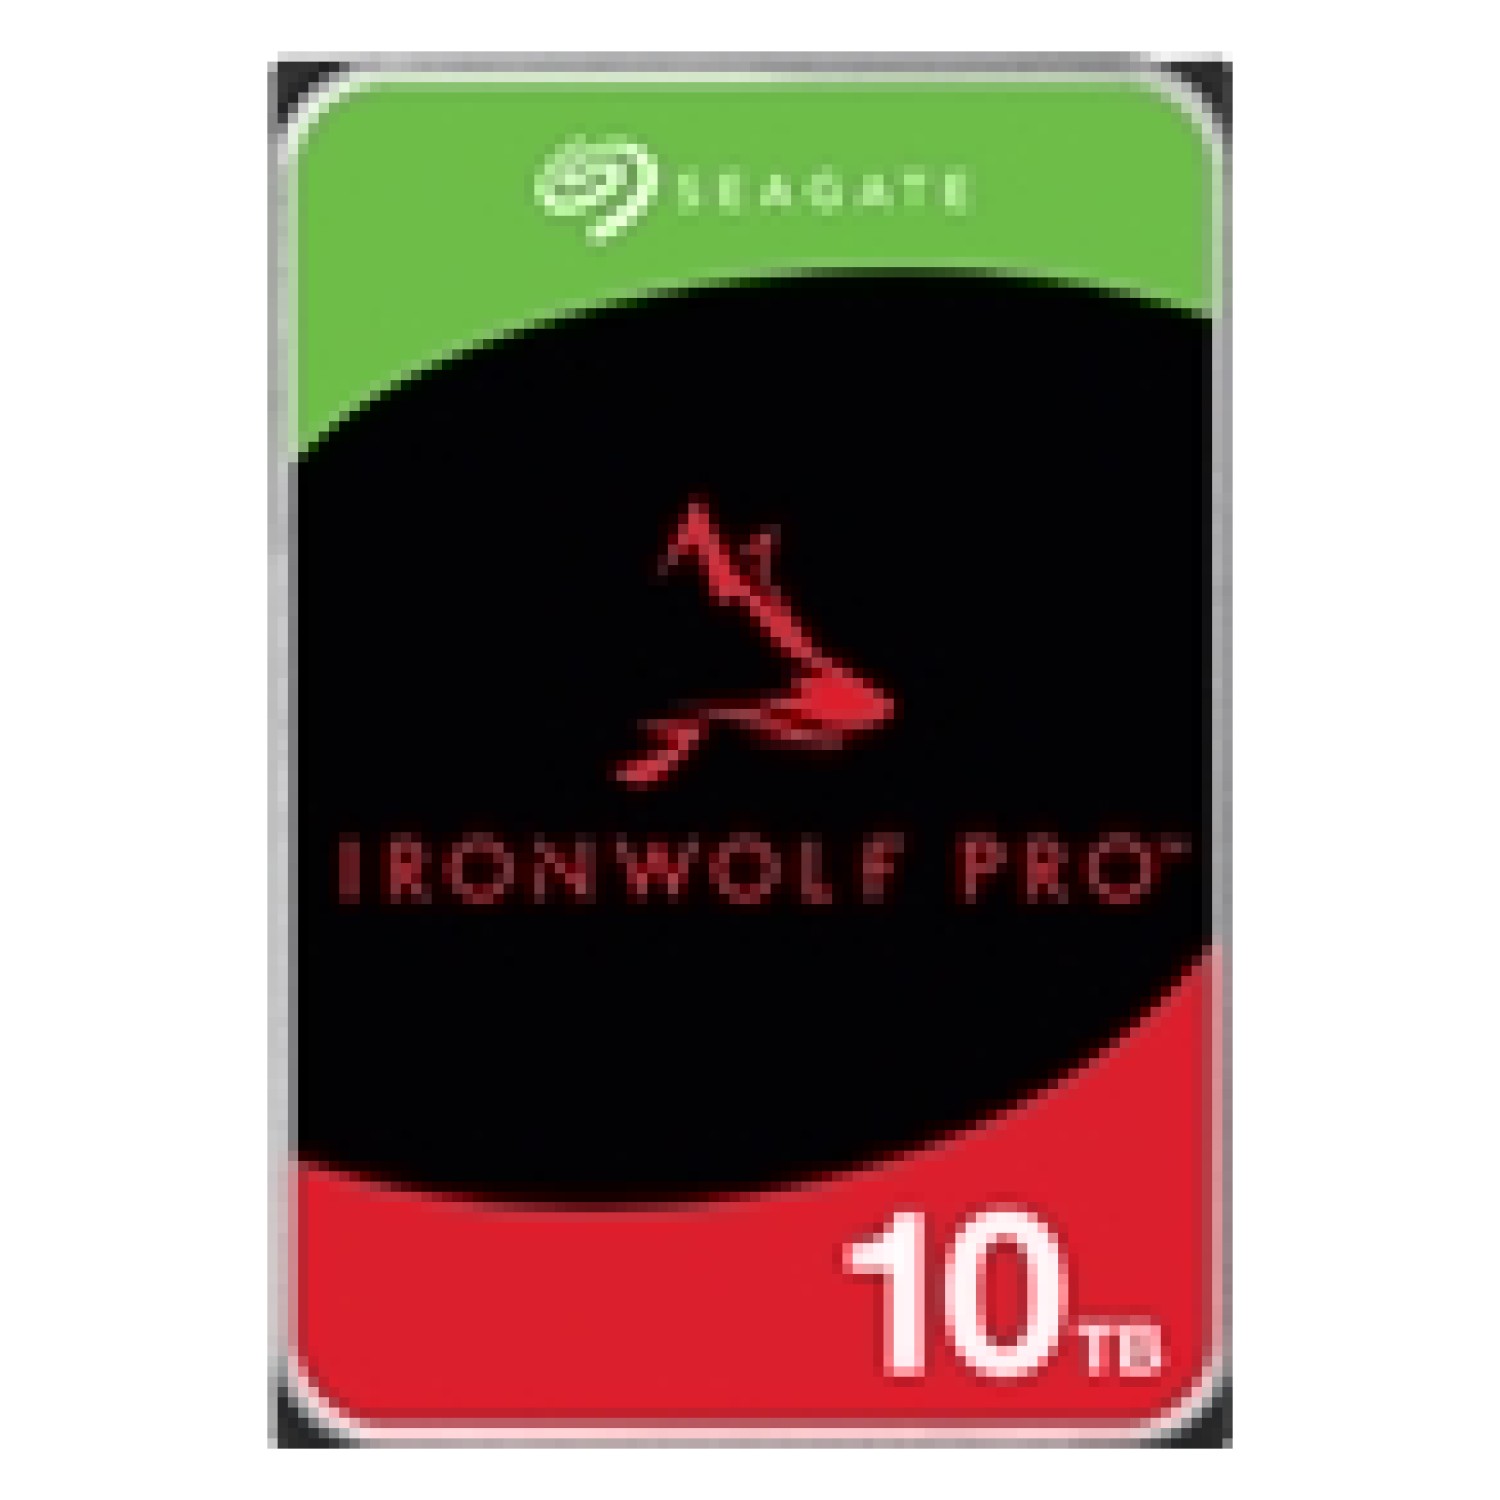 SEAGATE Ironwolf PRO NAS HDD 10TB SATA